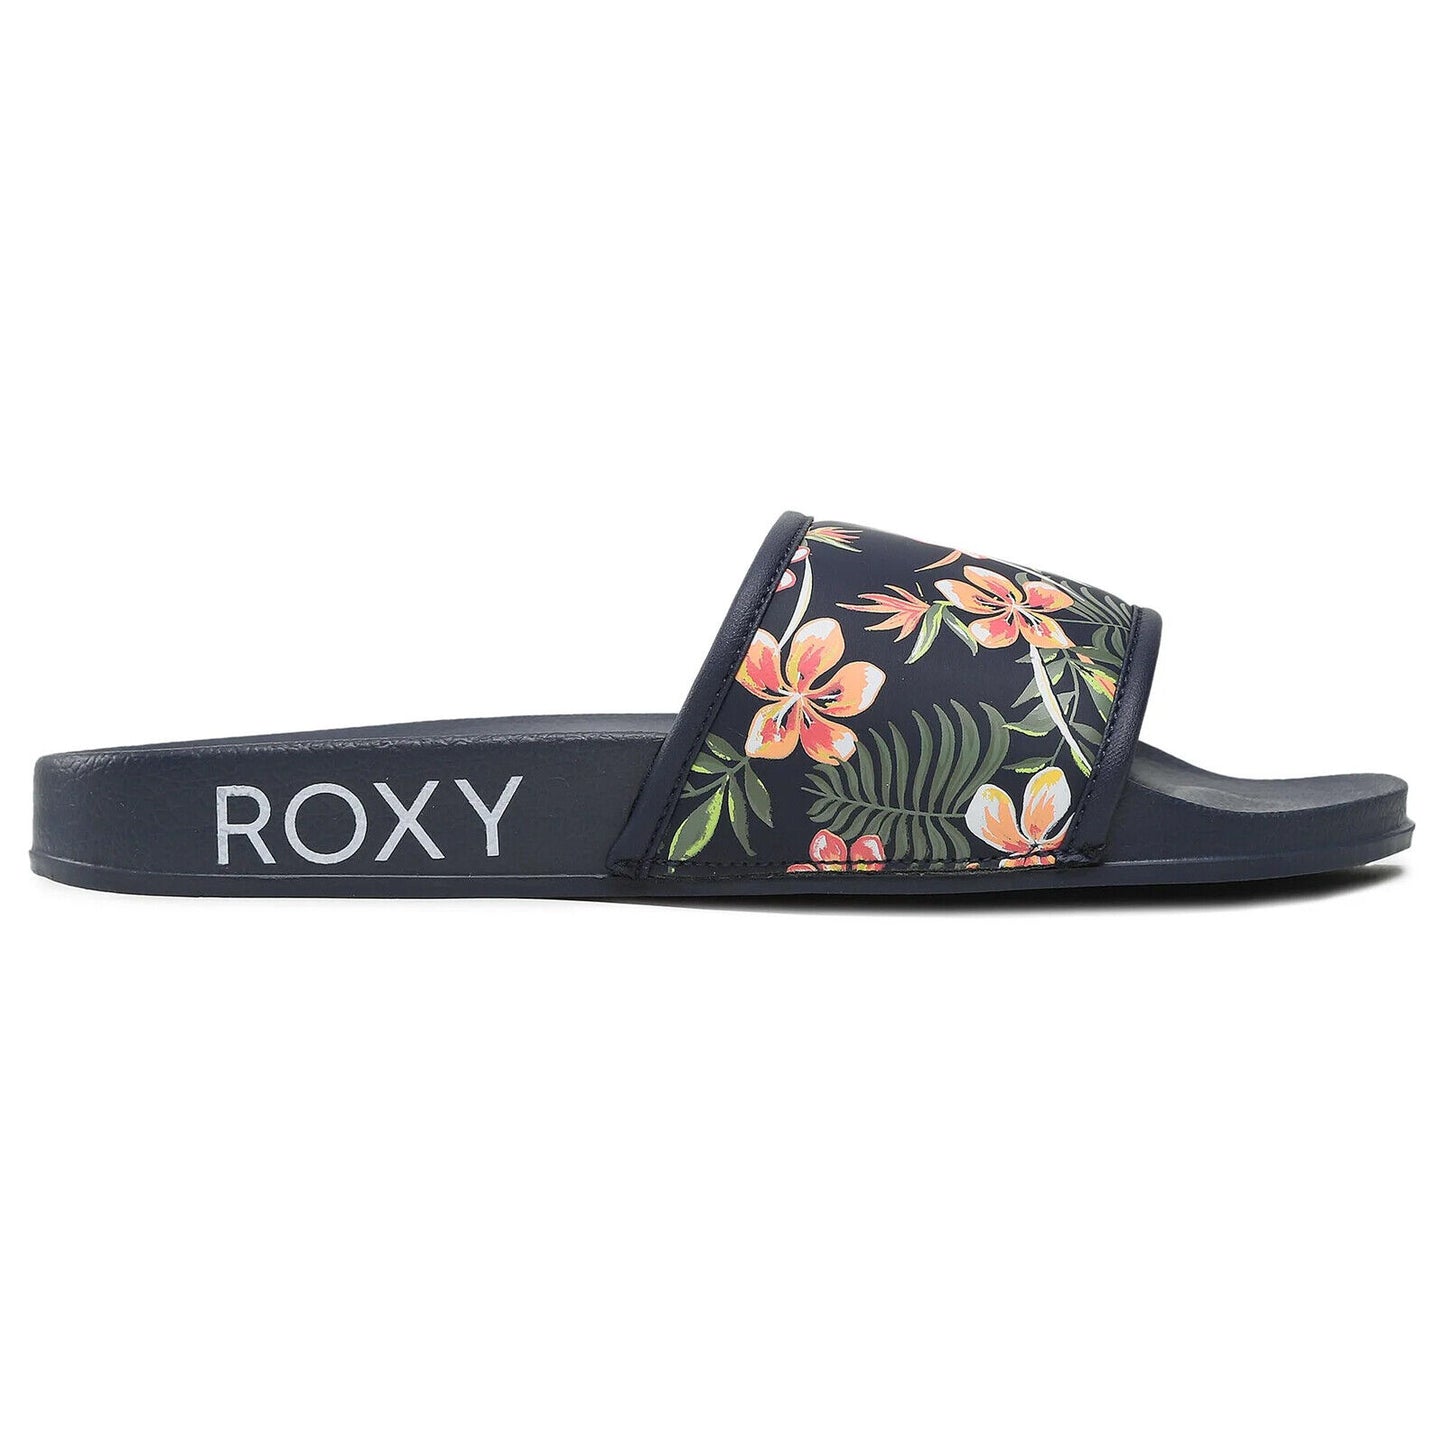 Roxy Ladies Slippy Tropical Floral Navy Slider Beach Sandals